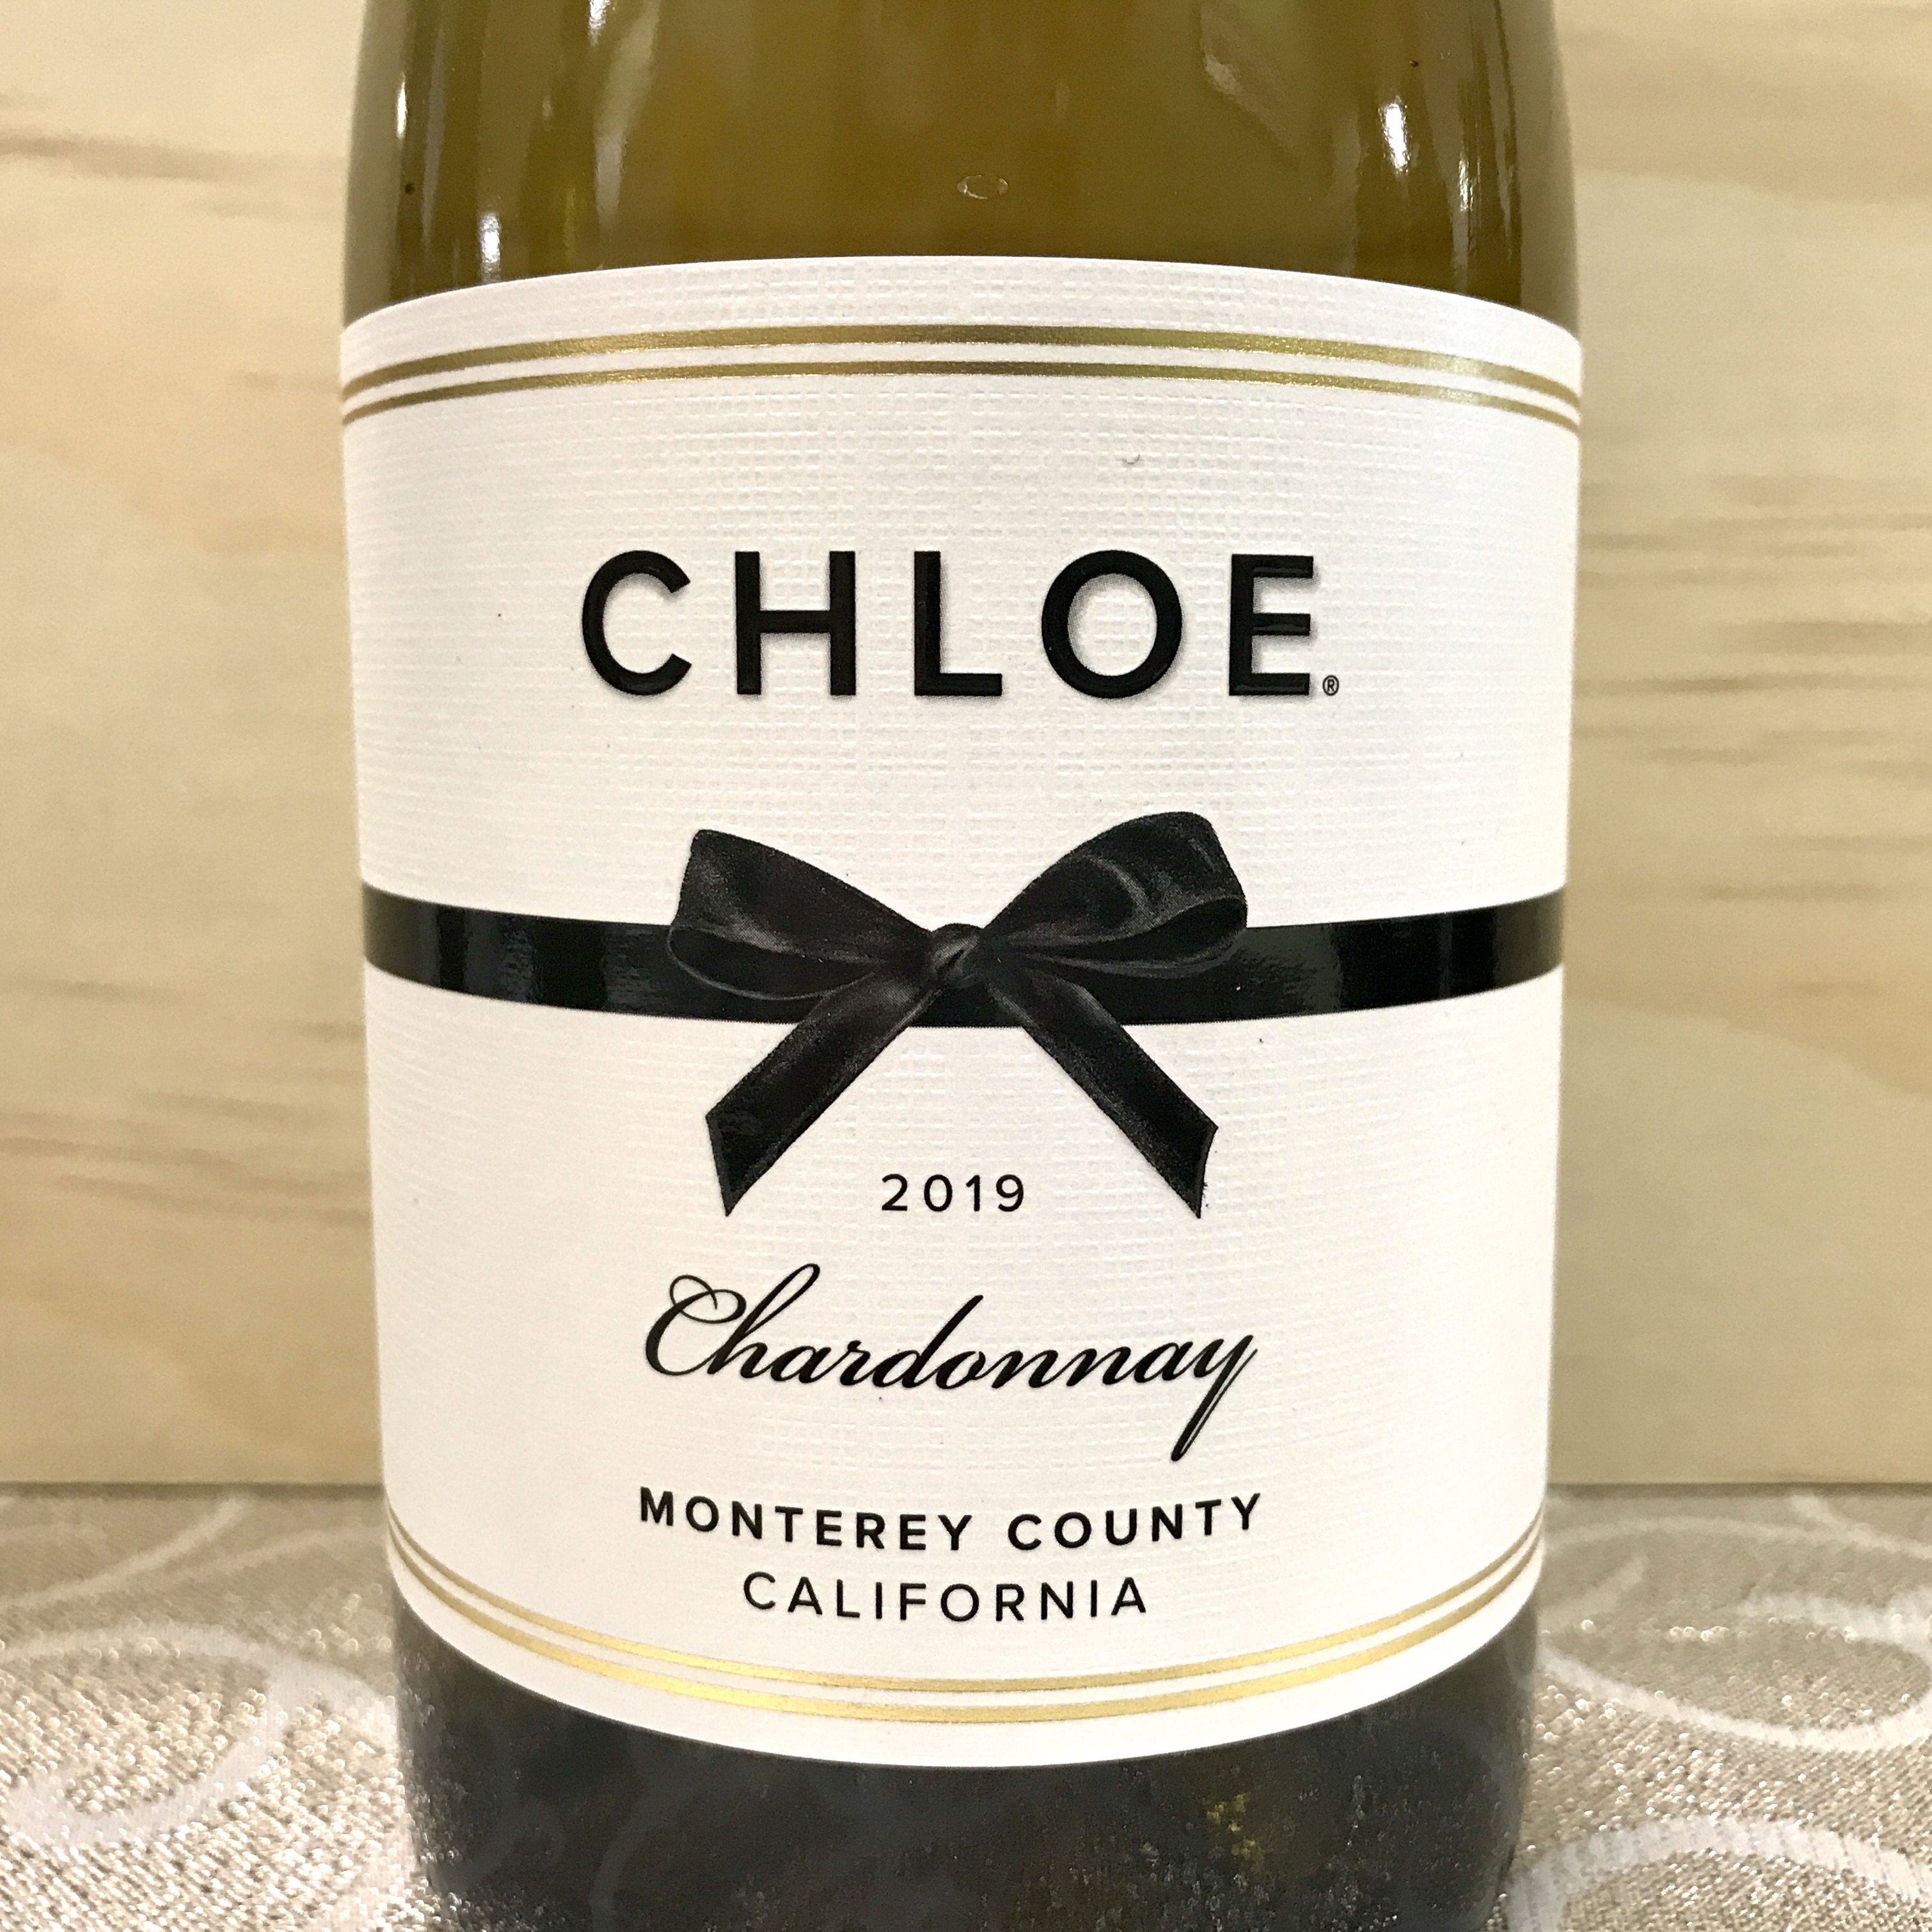 Chloe Monterey County Chardonnay 2019